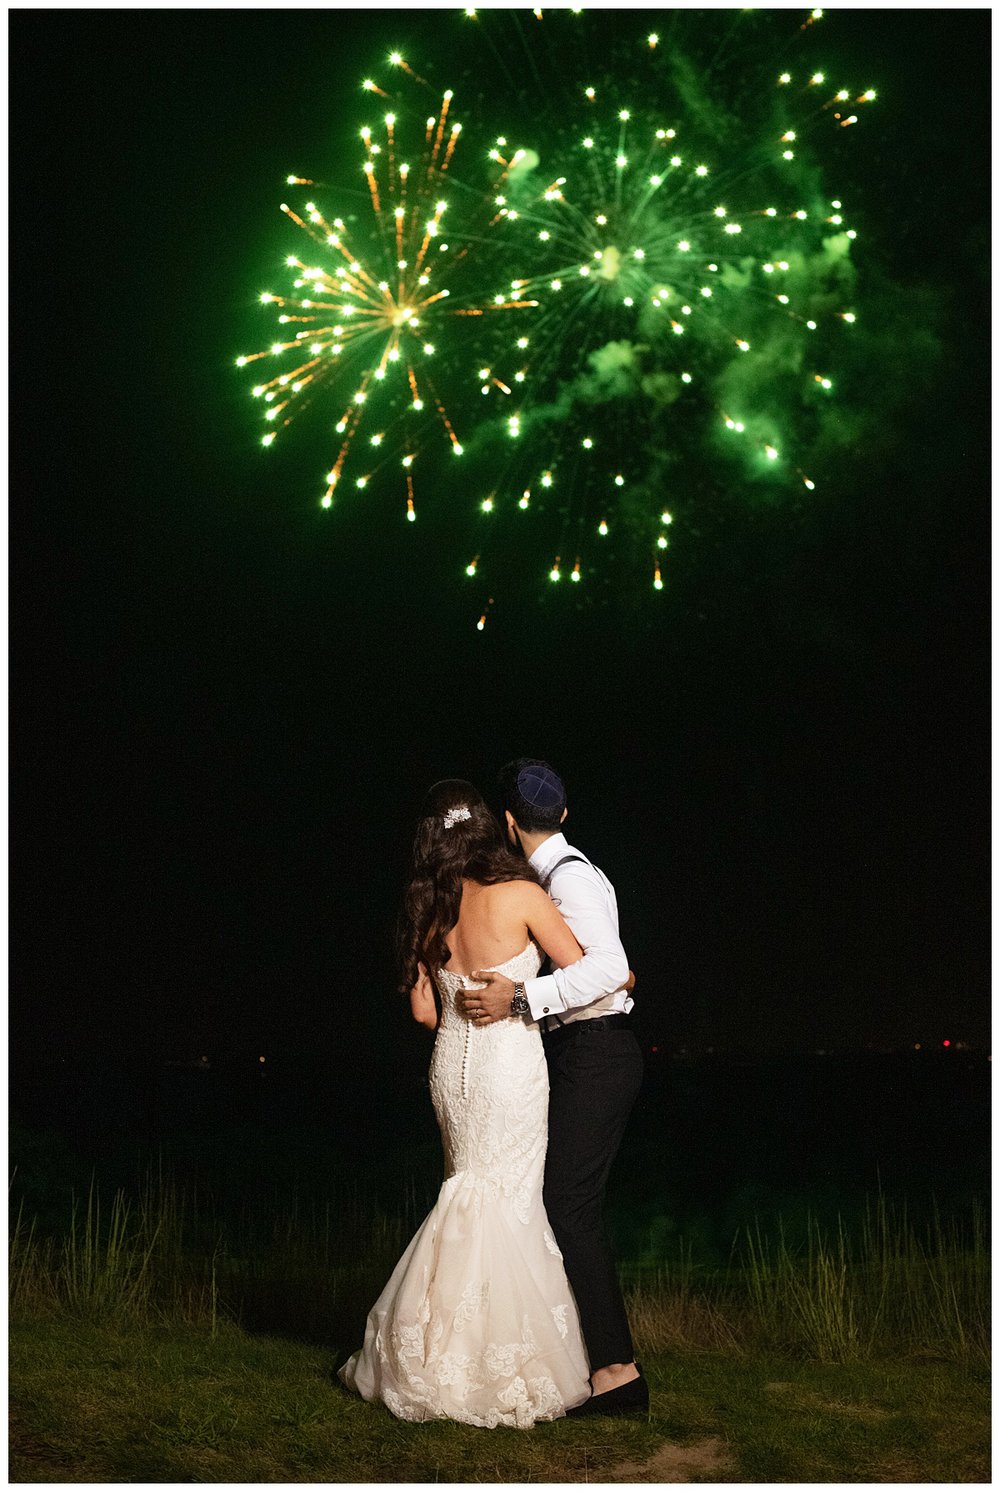 firework display for Granite links wedding reception